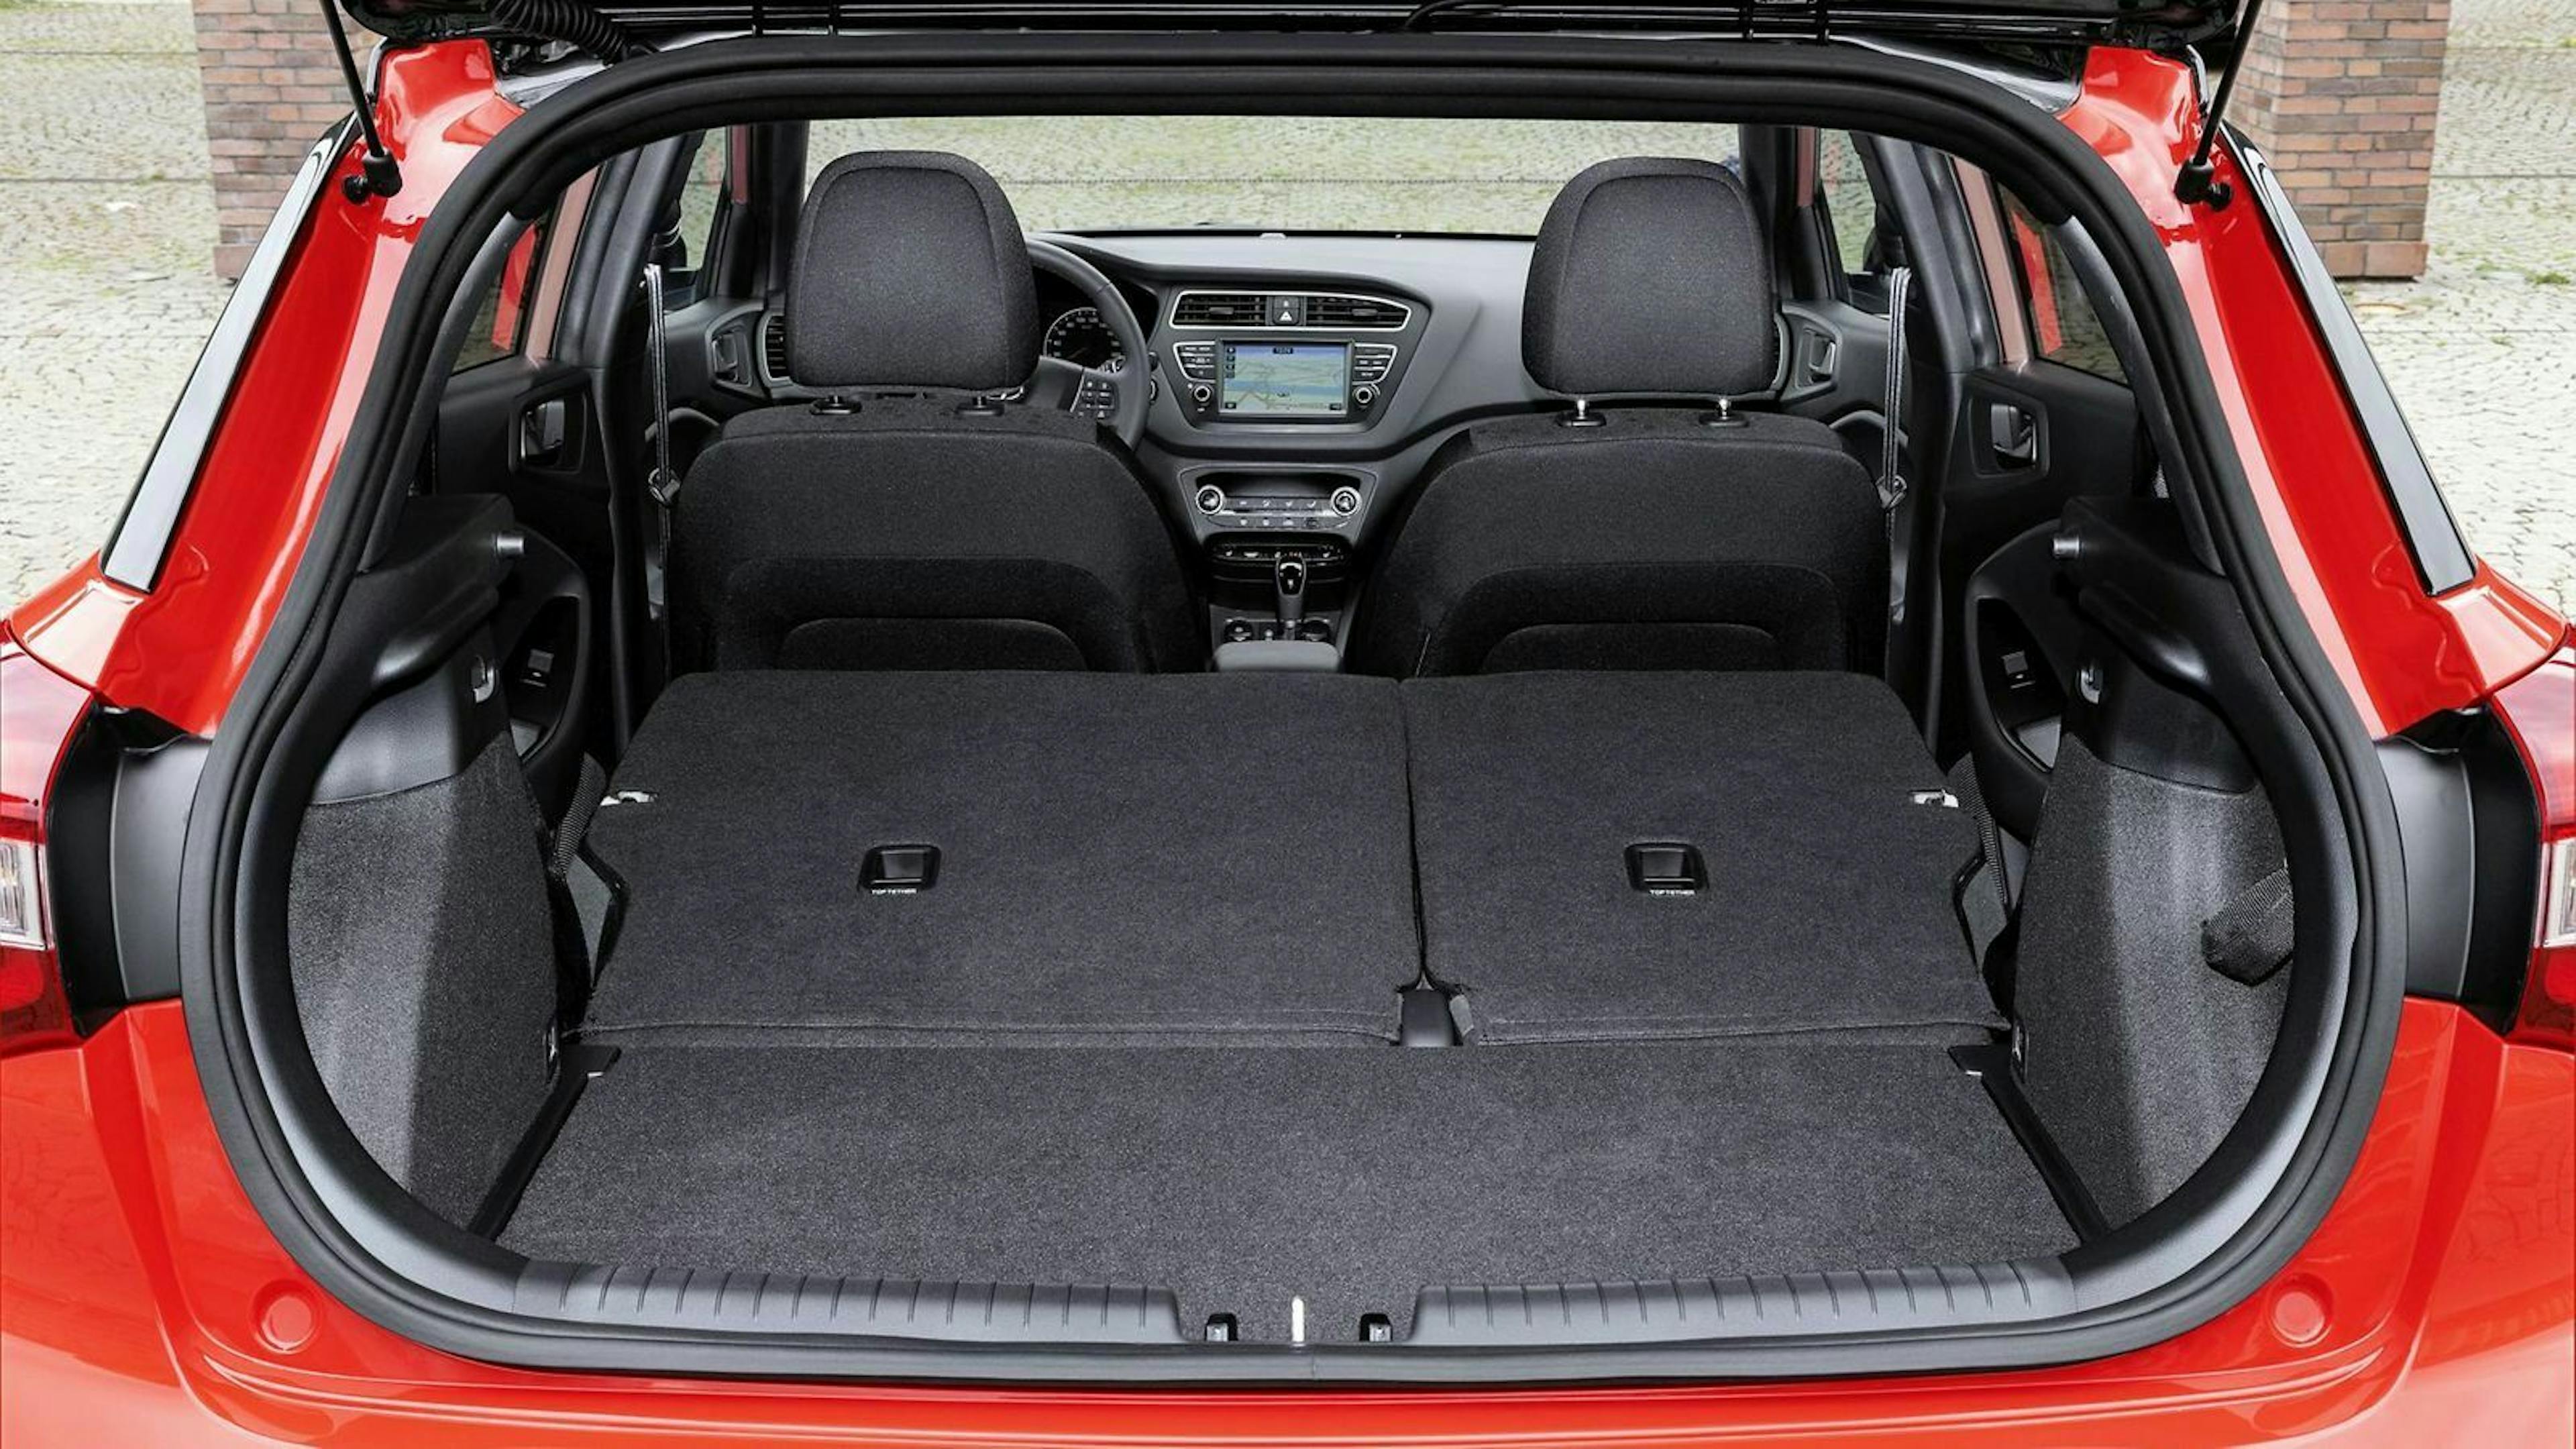 Blick in den Kofferraumd es Hyundai i20 bei umgeklappter Rückbank